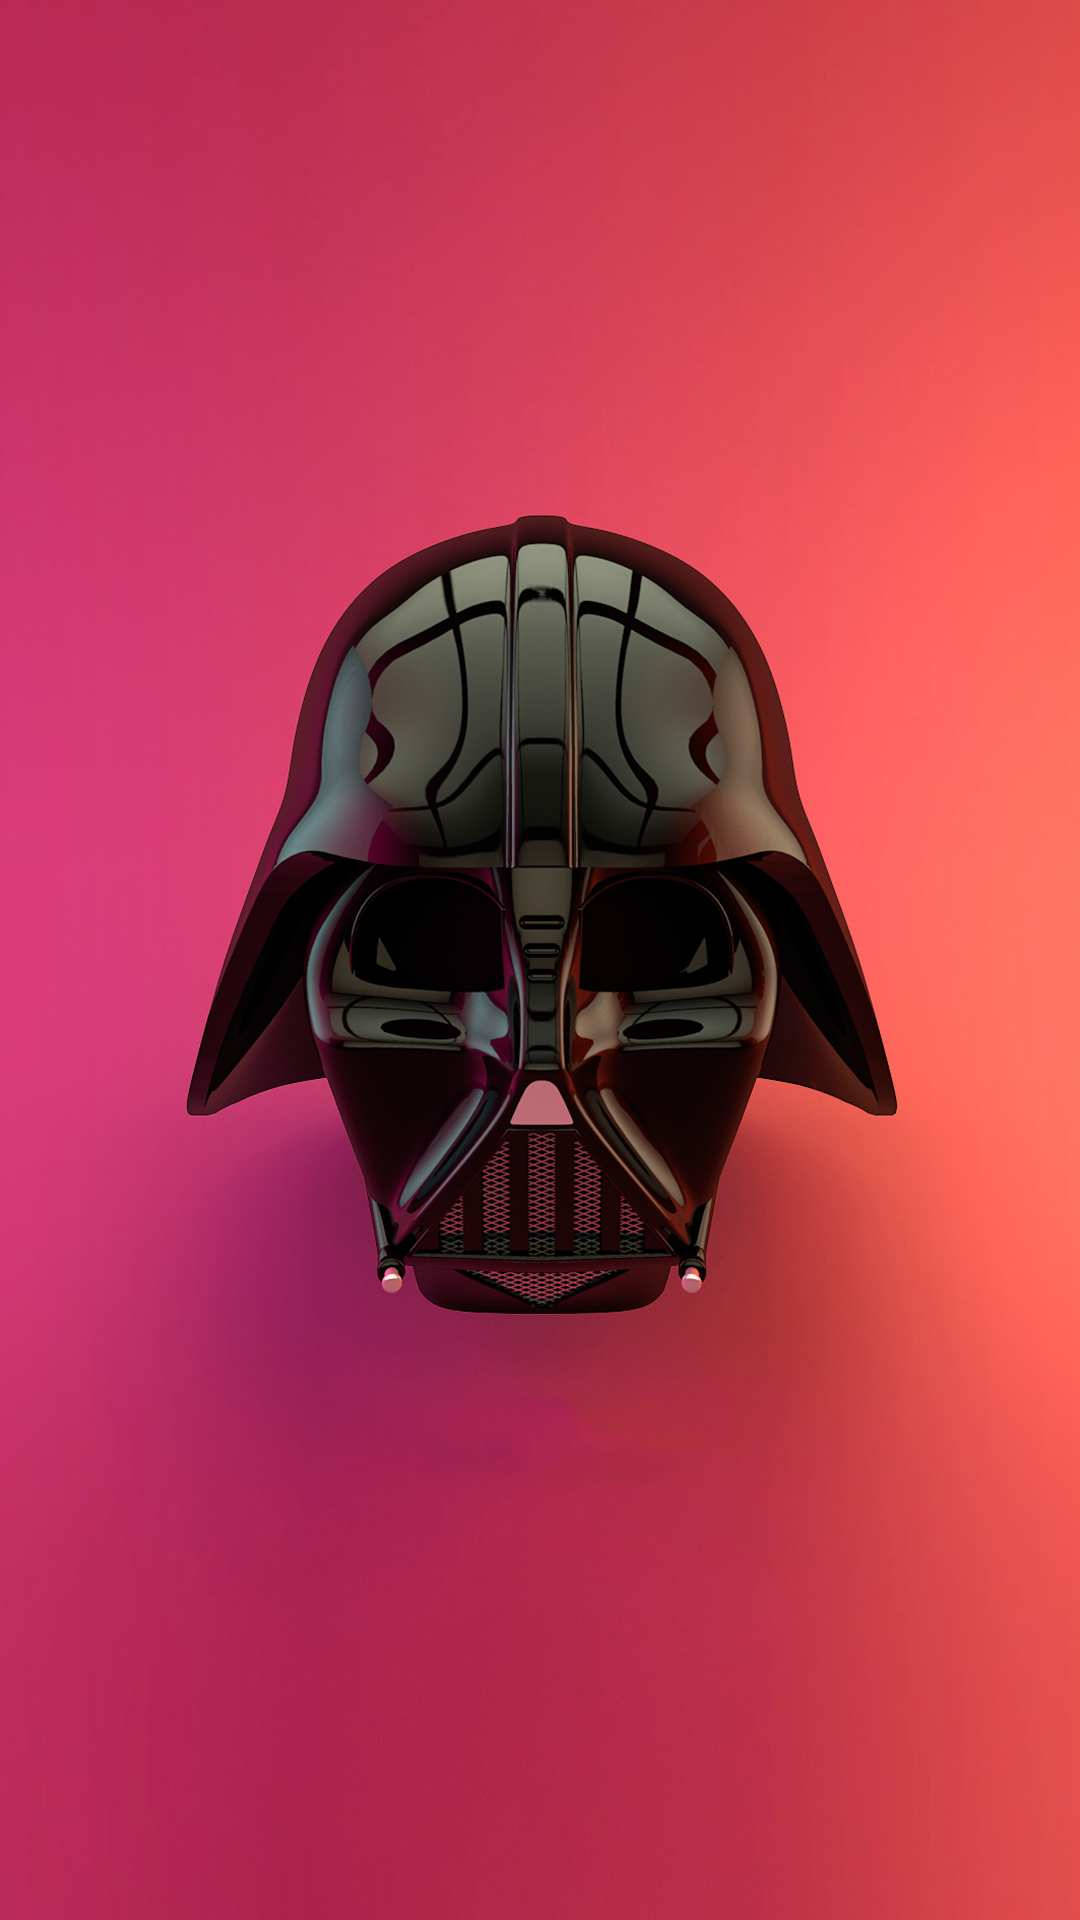 3d Apple Iphone Darth Vader's Helmet Wallpaper